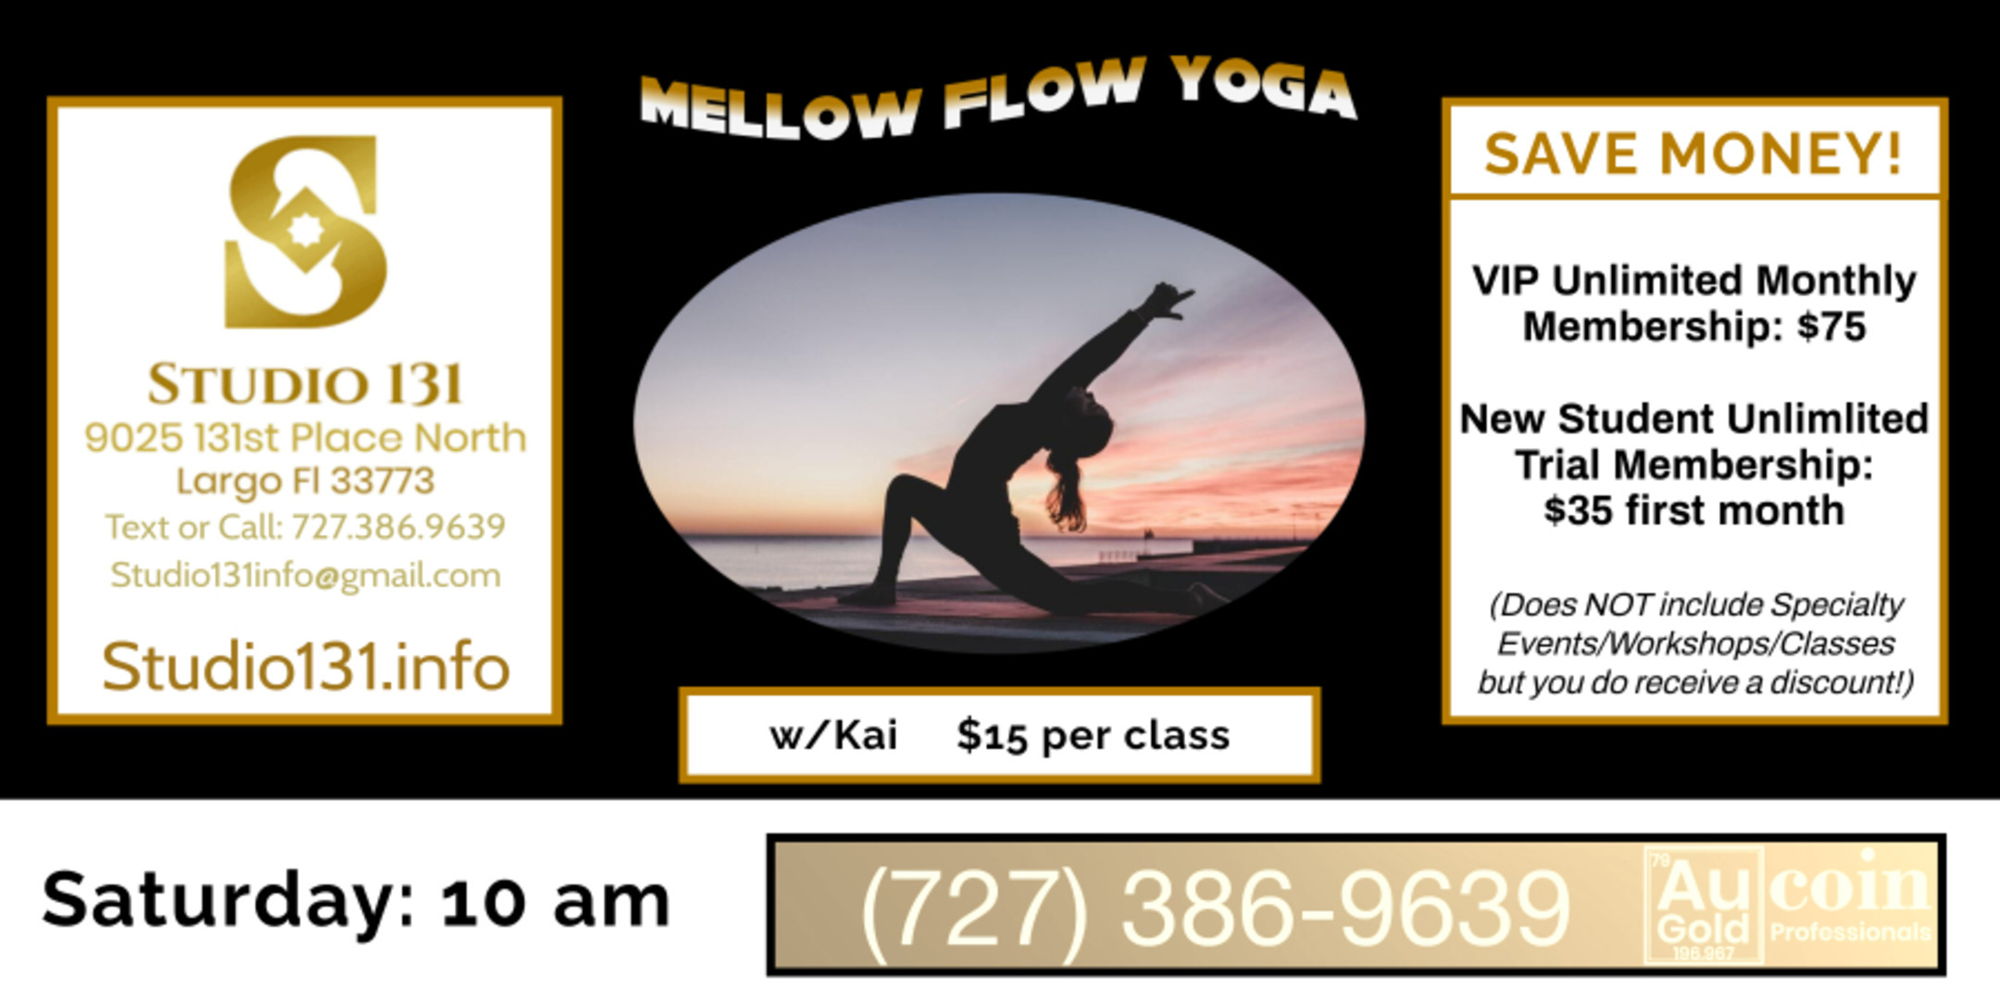 Mellow Flow Yoga  promotional image